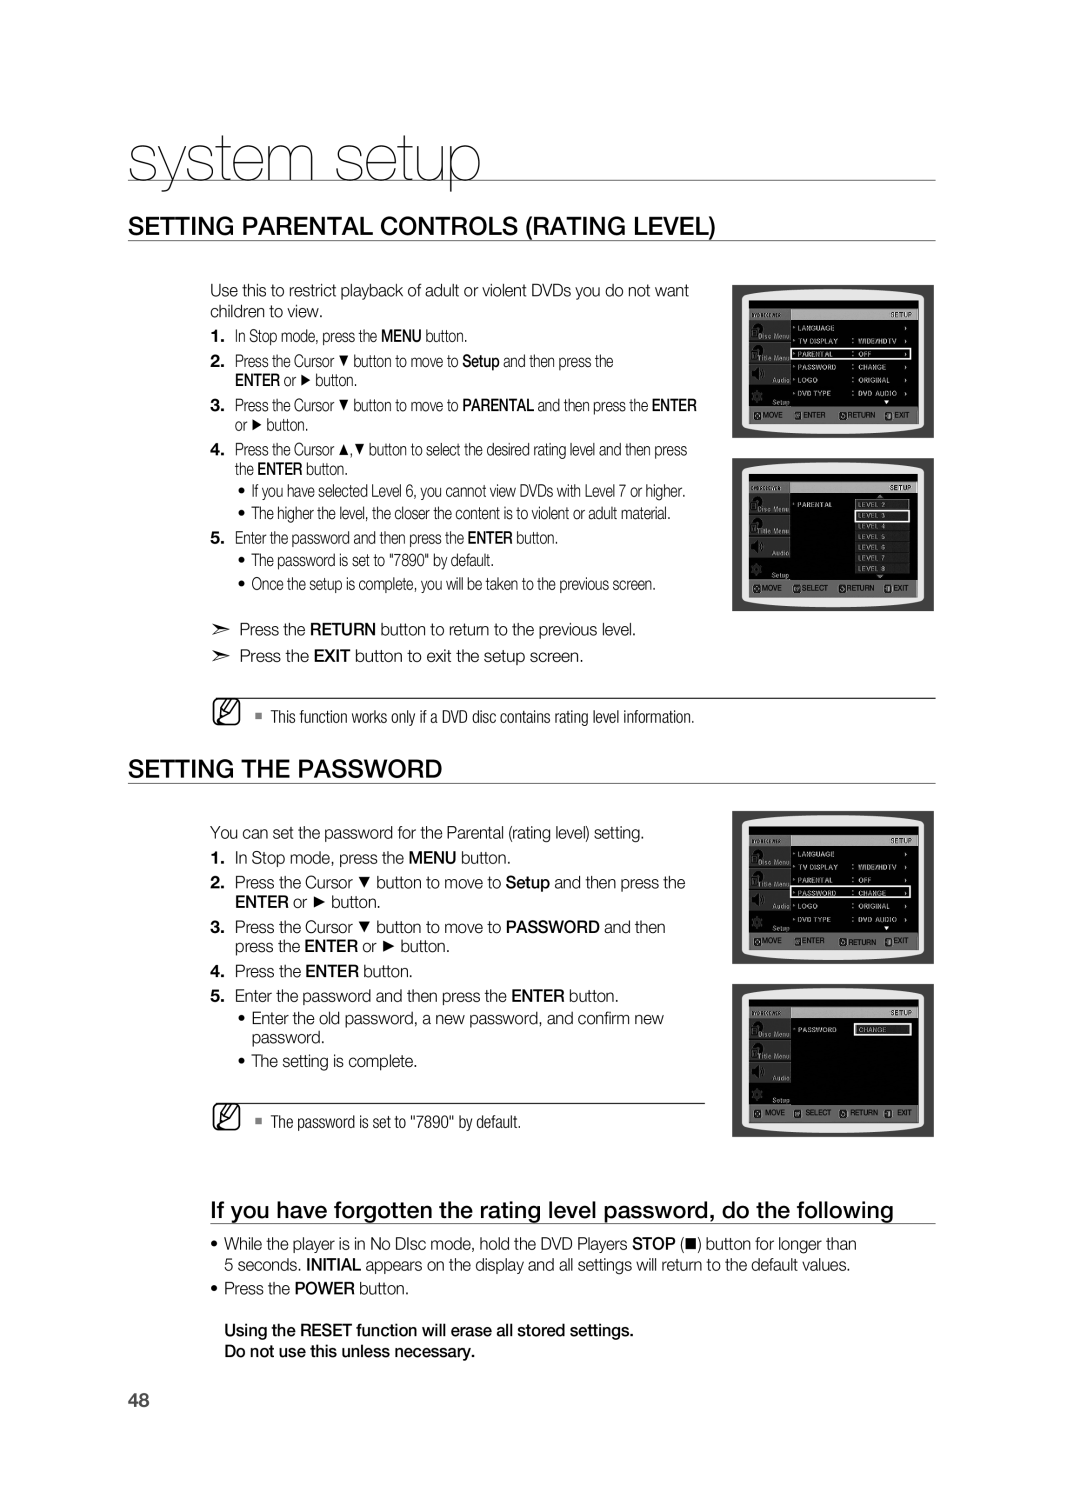 Samsung HT-TX715 user manual Setting Parental Controls Rating Level, Setting the Password, system setup 